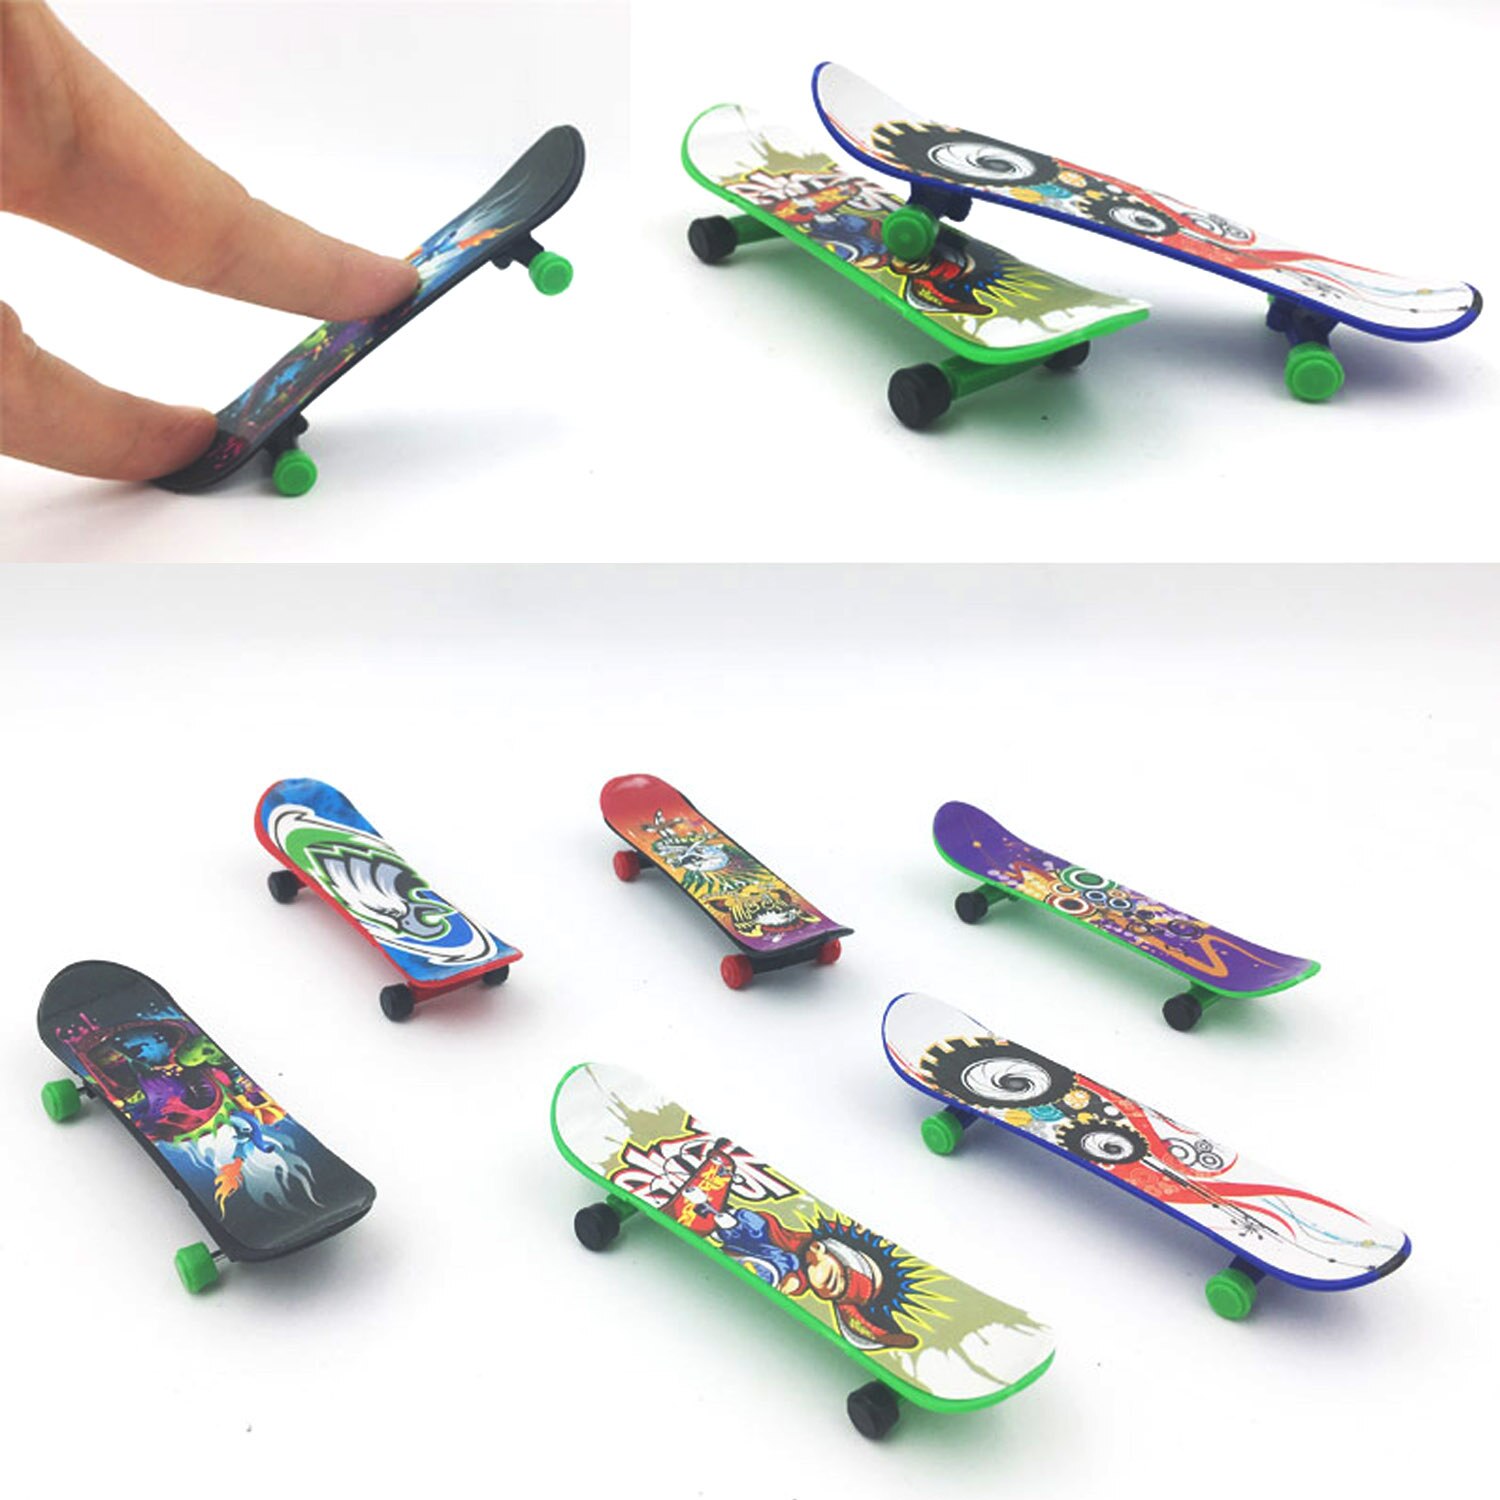 Besegad 10 PCS Plastic Mini Vinger Skateboards Toets Speelgoed voor Kids Kinderen Cirthday Christmas Party Willekeurige Stijl